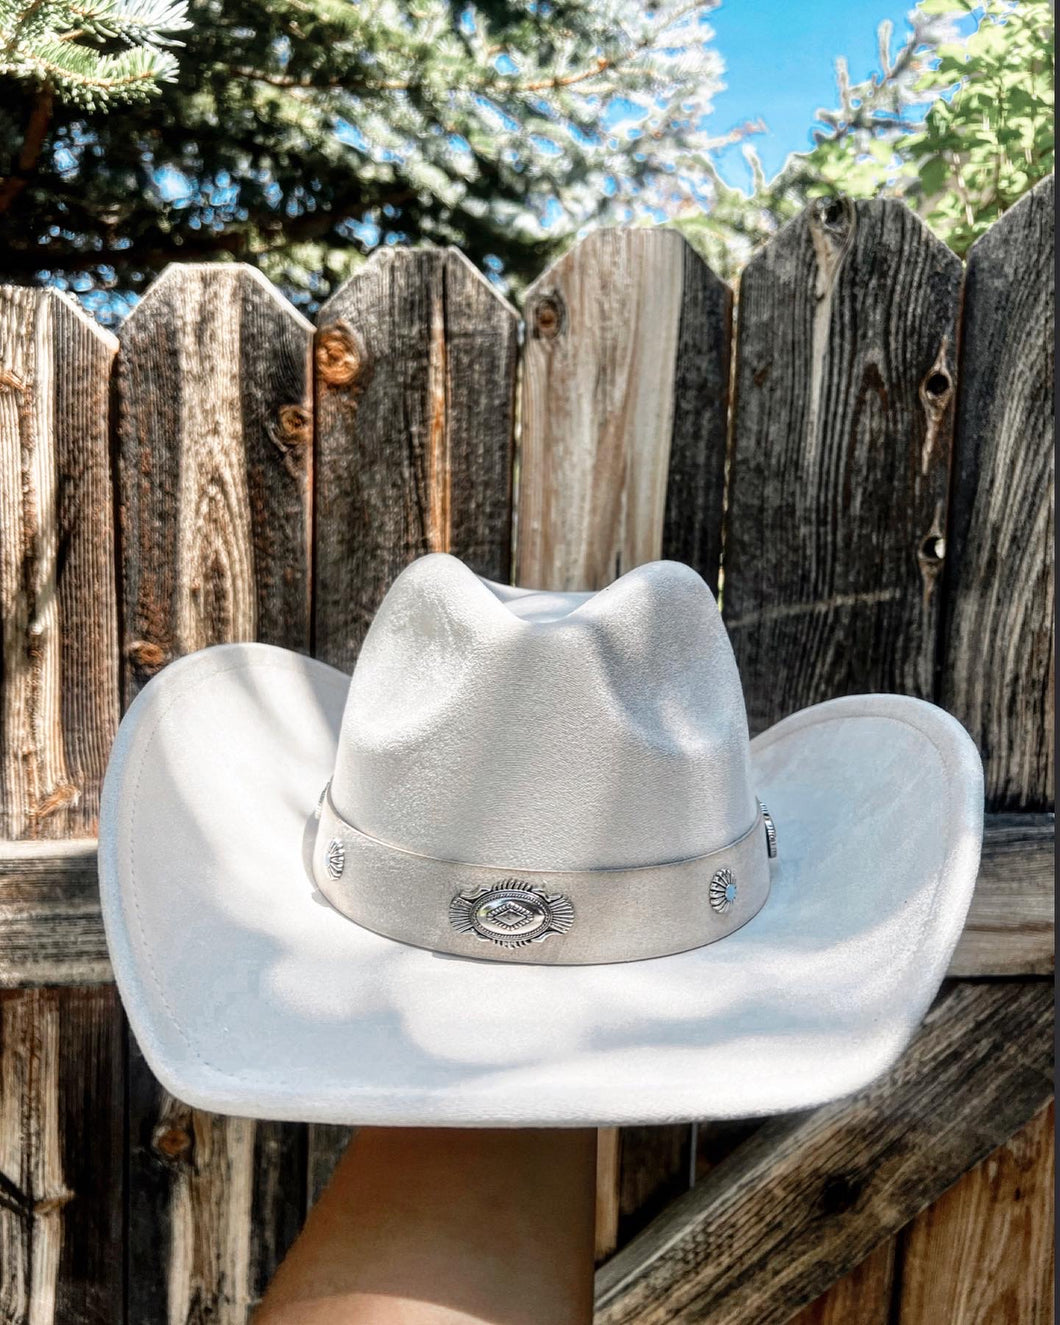 Western Disc Ribbon Strap Cowboy Hat